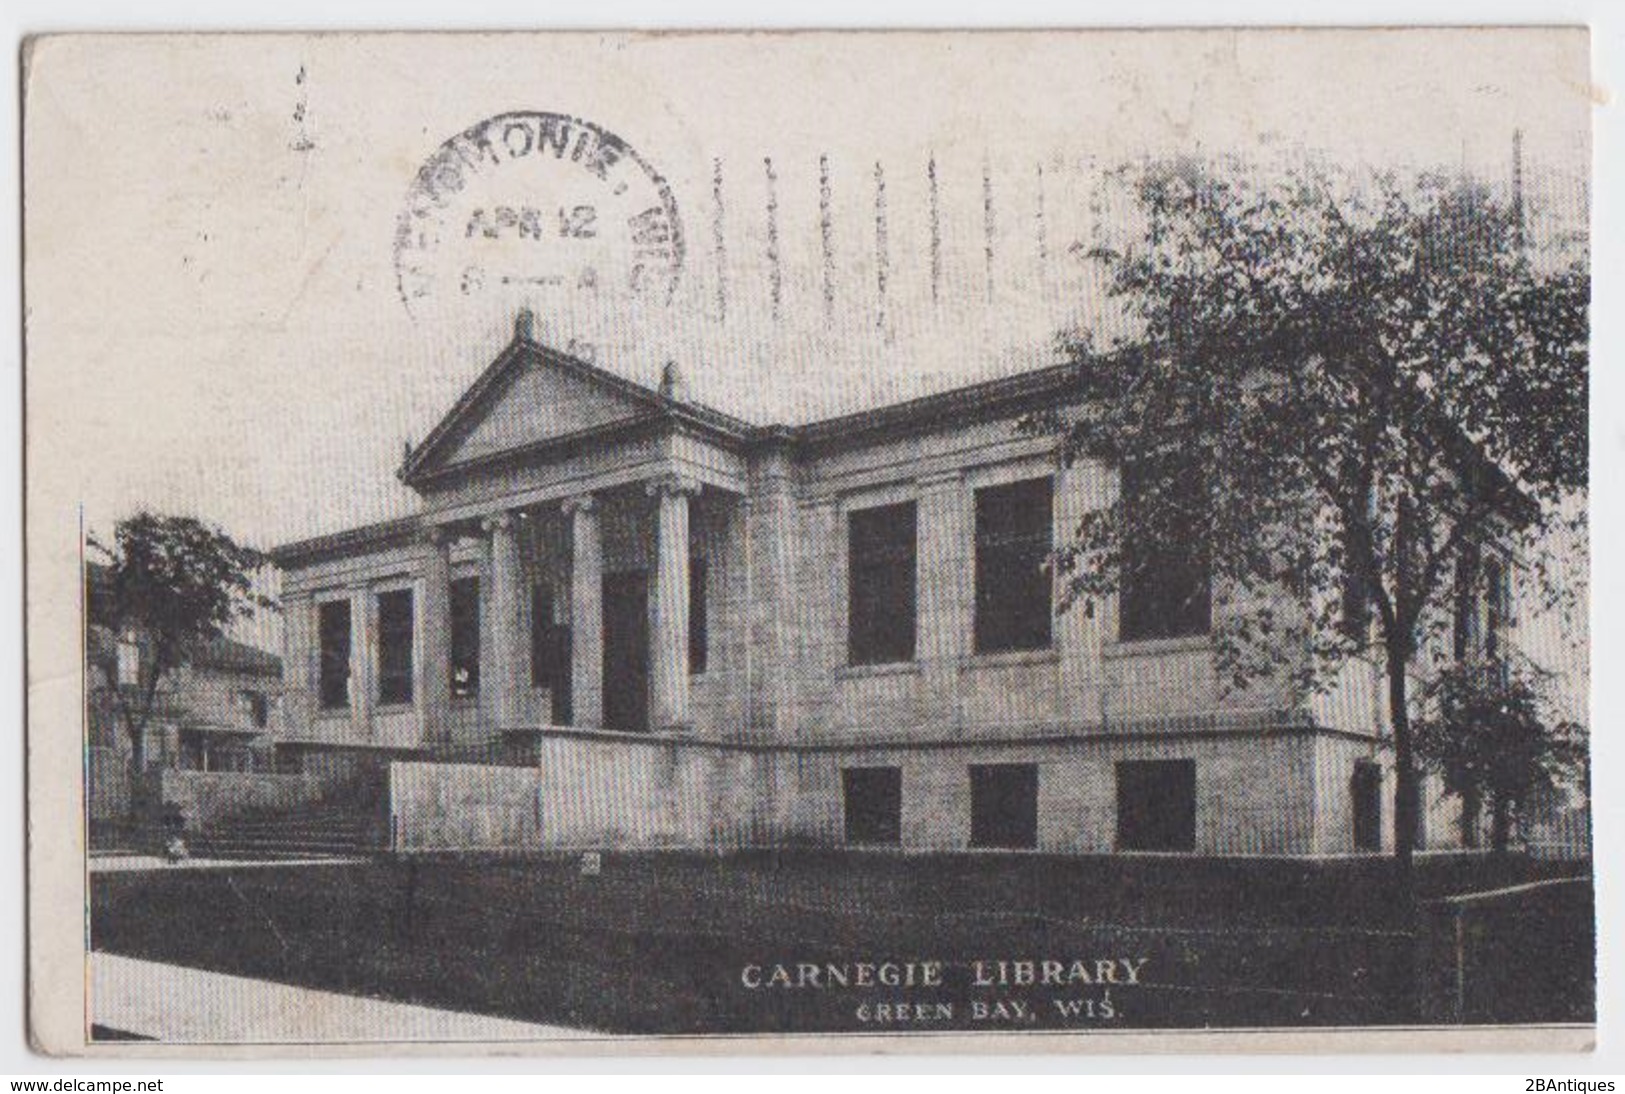 Green Bay - Carnegie Library - Green Bay